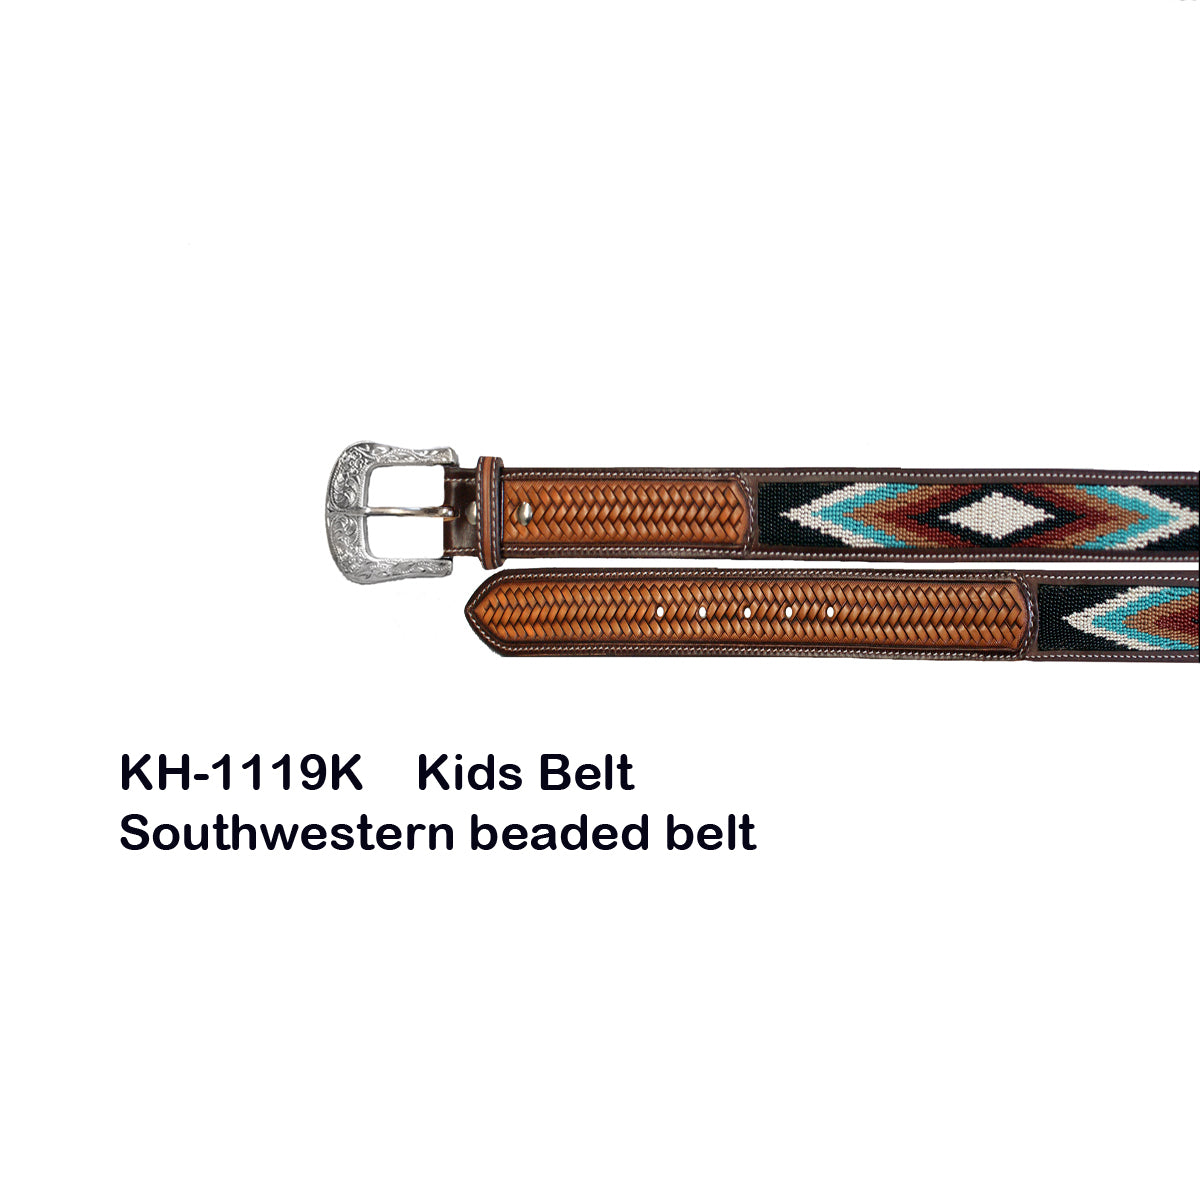 Ranger Belt Co. Kid's Southwestern Beaded Inlay Belt - Red/Turquoise/Brown